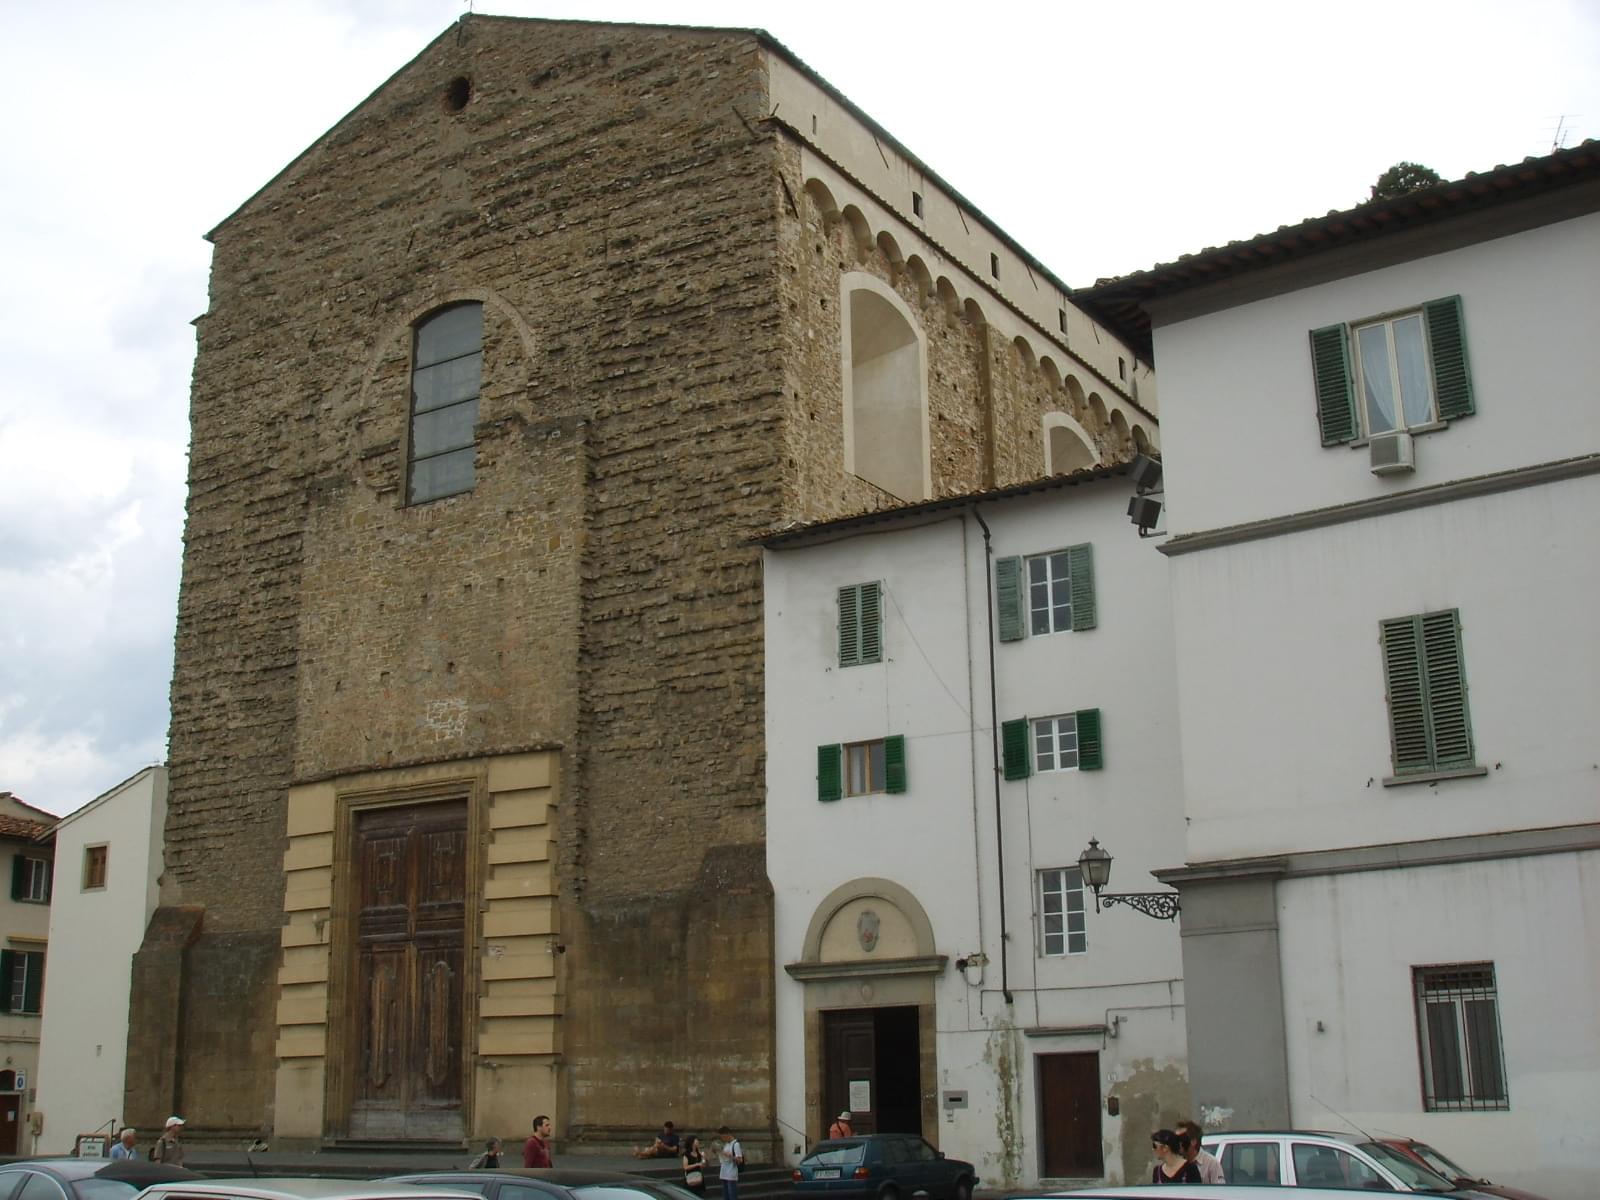 Cappella Brancacci & Santa Maria de Carmine